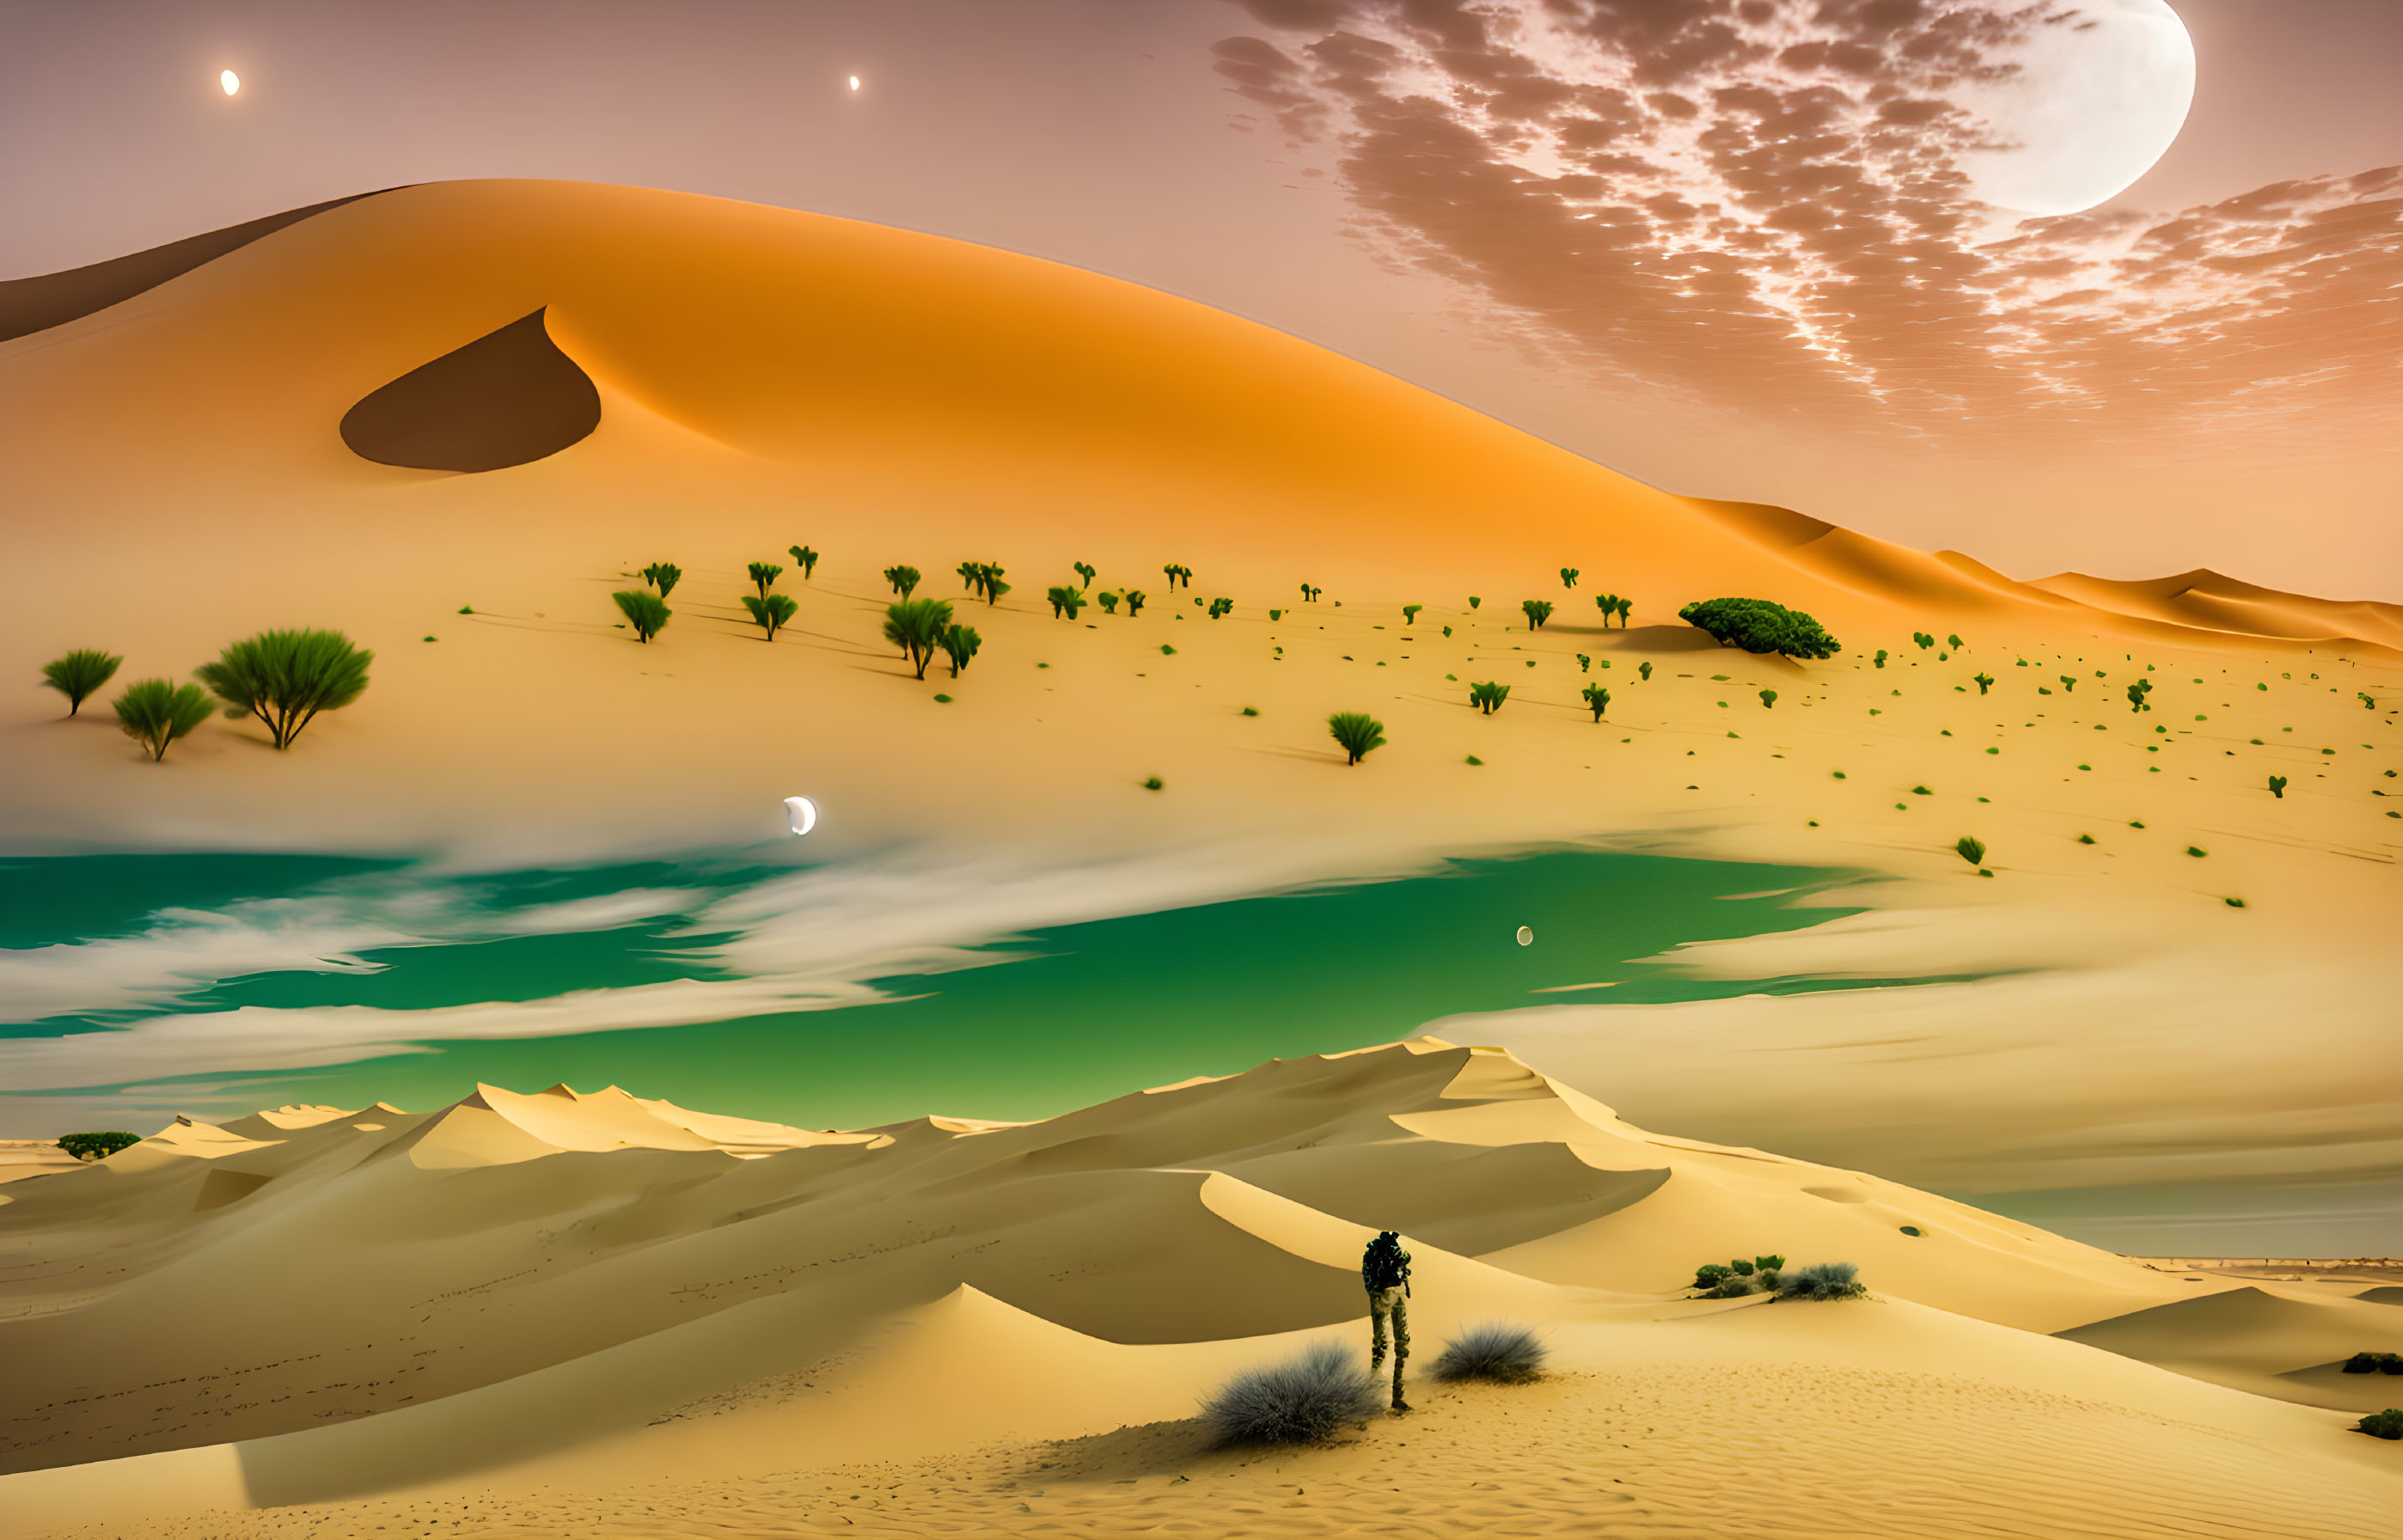 Moonlit Dunescape: A Surreal Desert Fantasy